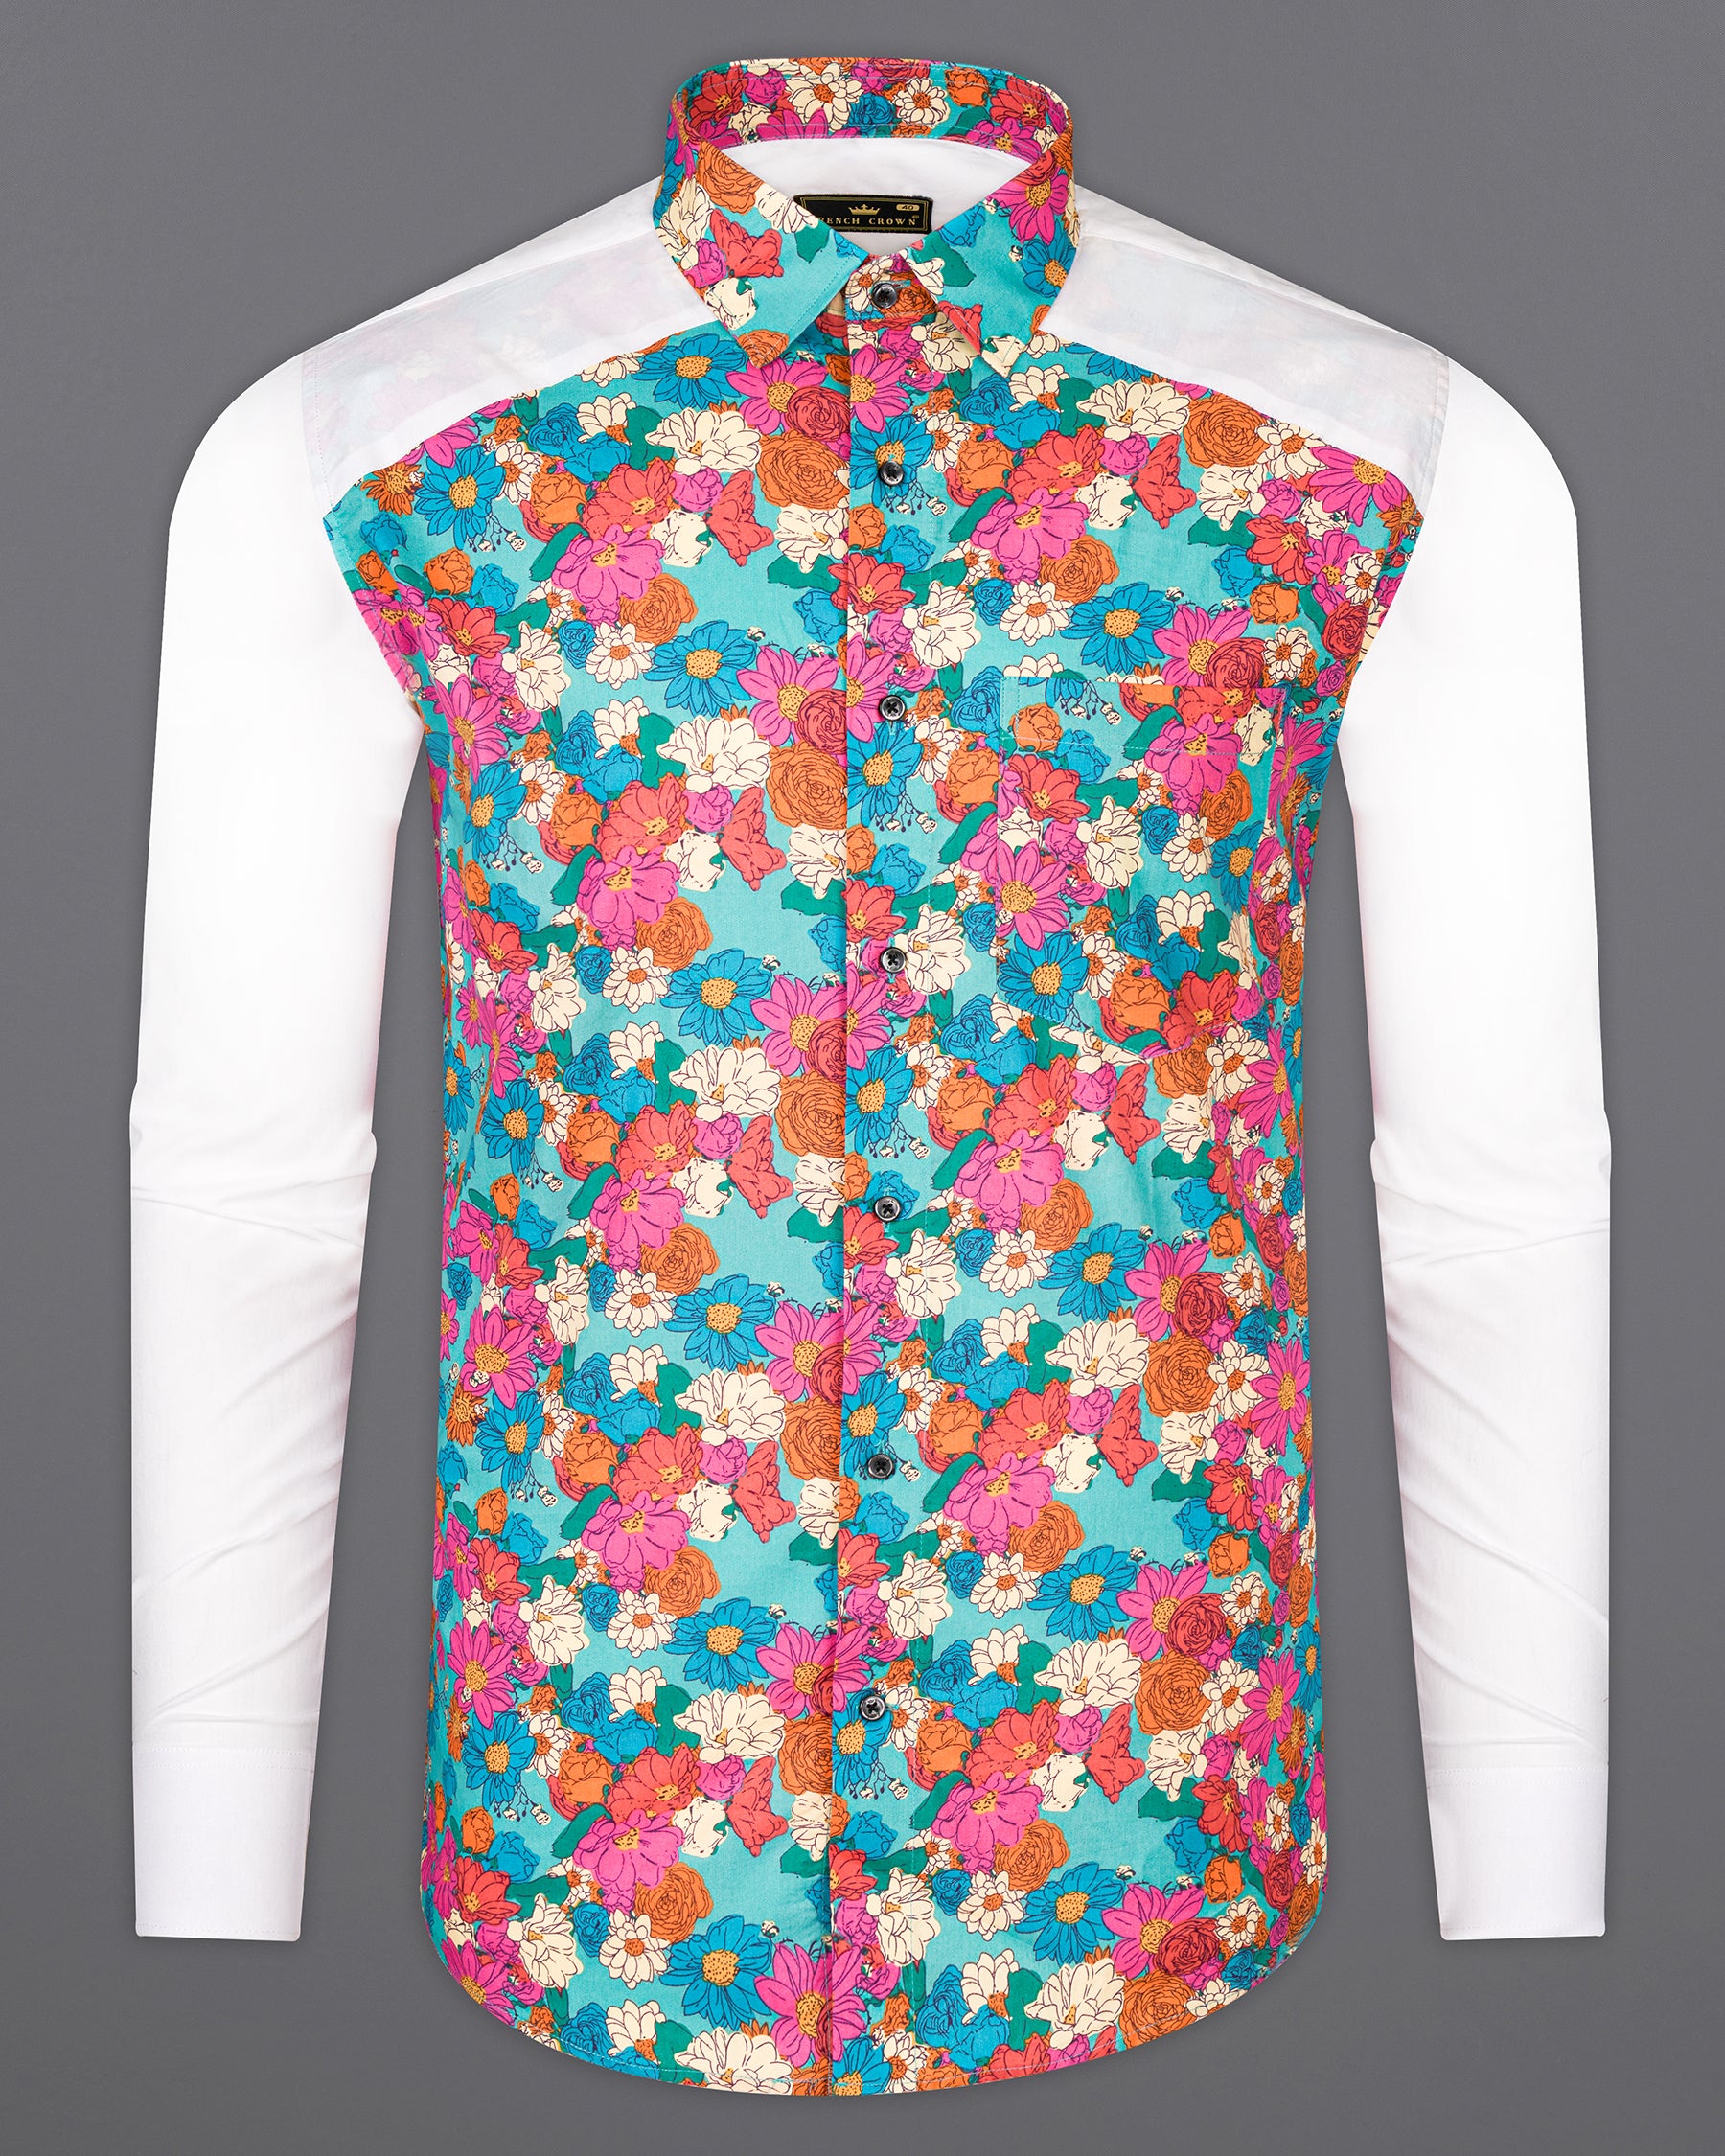 Dony Blue with Brilliant Pink Multicolour Floral Printed Super Soft Premium Cotton Designer Shirt 9751-BLK-P363-38, 9751-BLK-P363-H-38, 9751-BLK-P363-39, 9751-BLK-P363-H-39, 9751-BLK-P363-40, 9751-BLK-P363-H-40, 9751-BLK-P363-42, 9751-BLK-P363-H-42, 9751-BLK-P363-44, 9751-BLK-P363-H-44, 9751-BLK-P363-46, 9751-BLK-P363-H-46, 9751-BLK-P363-48, 9751-BLK-P363-H-48, 9751-BLK-P363-50, 9751-BLK-P363-H-50, 9751-BLK-P363-52, 9751-BLK-P363-H-52